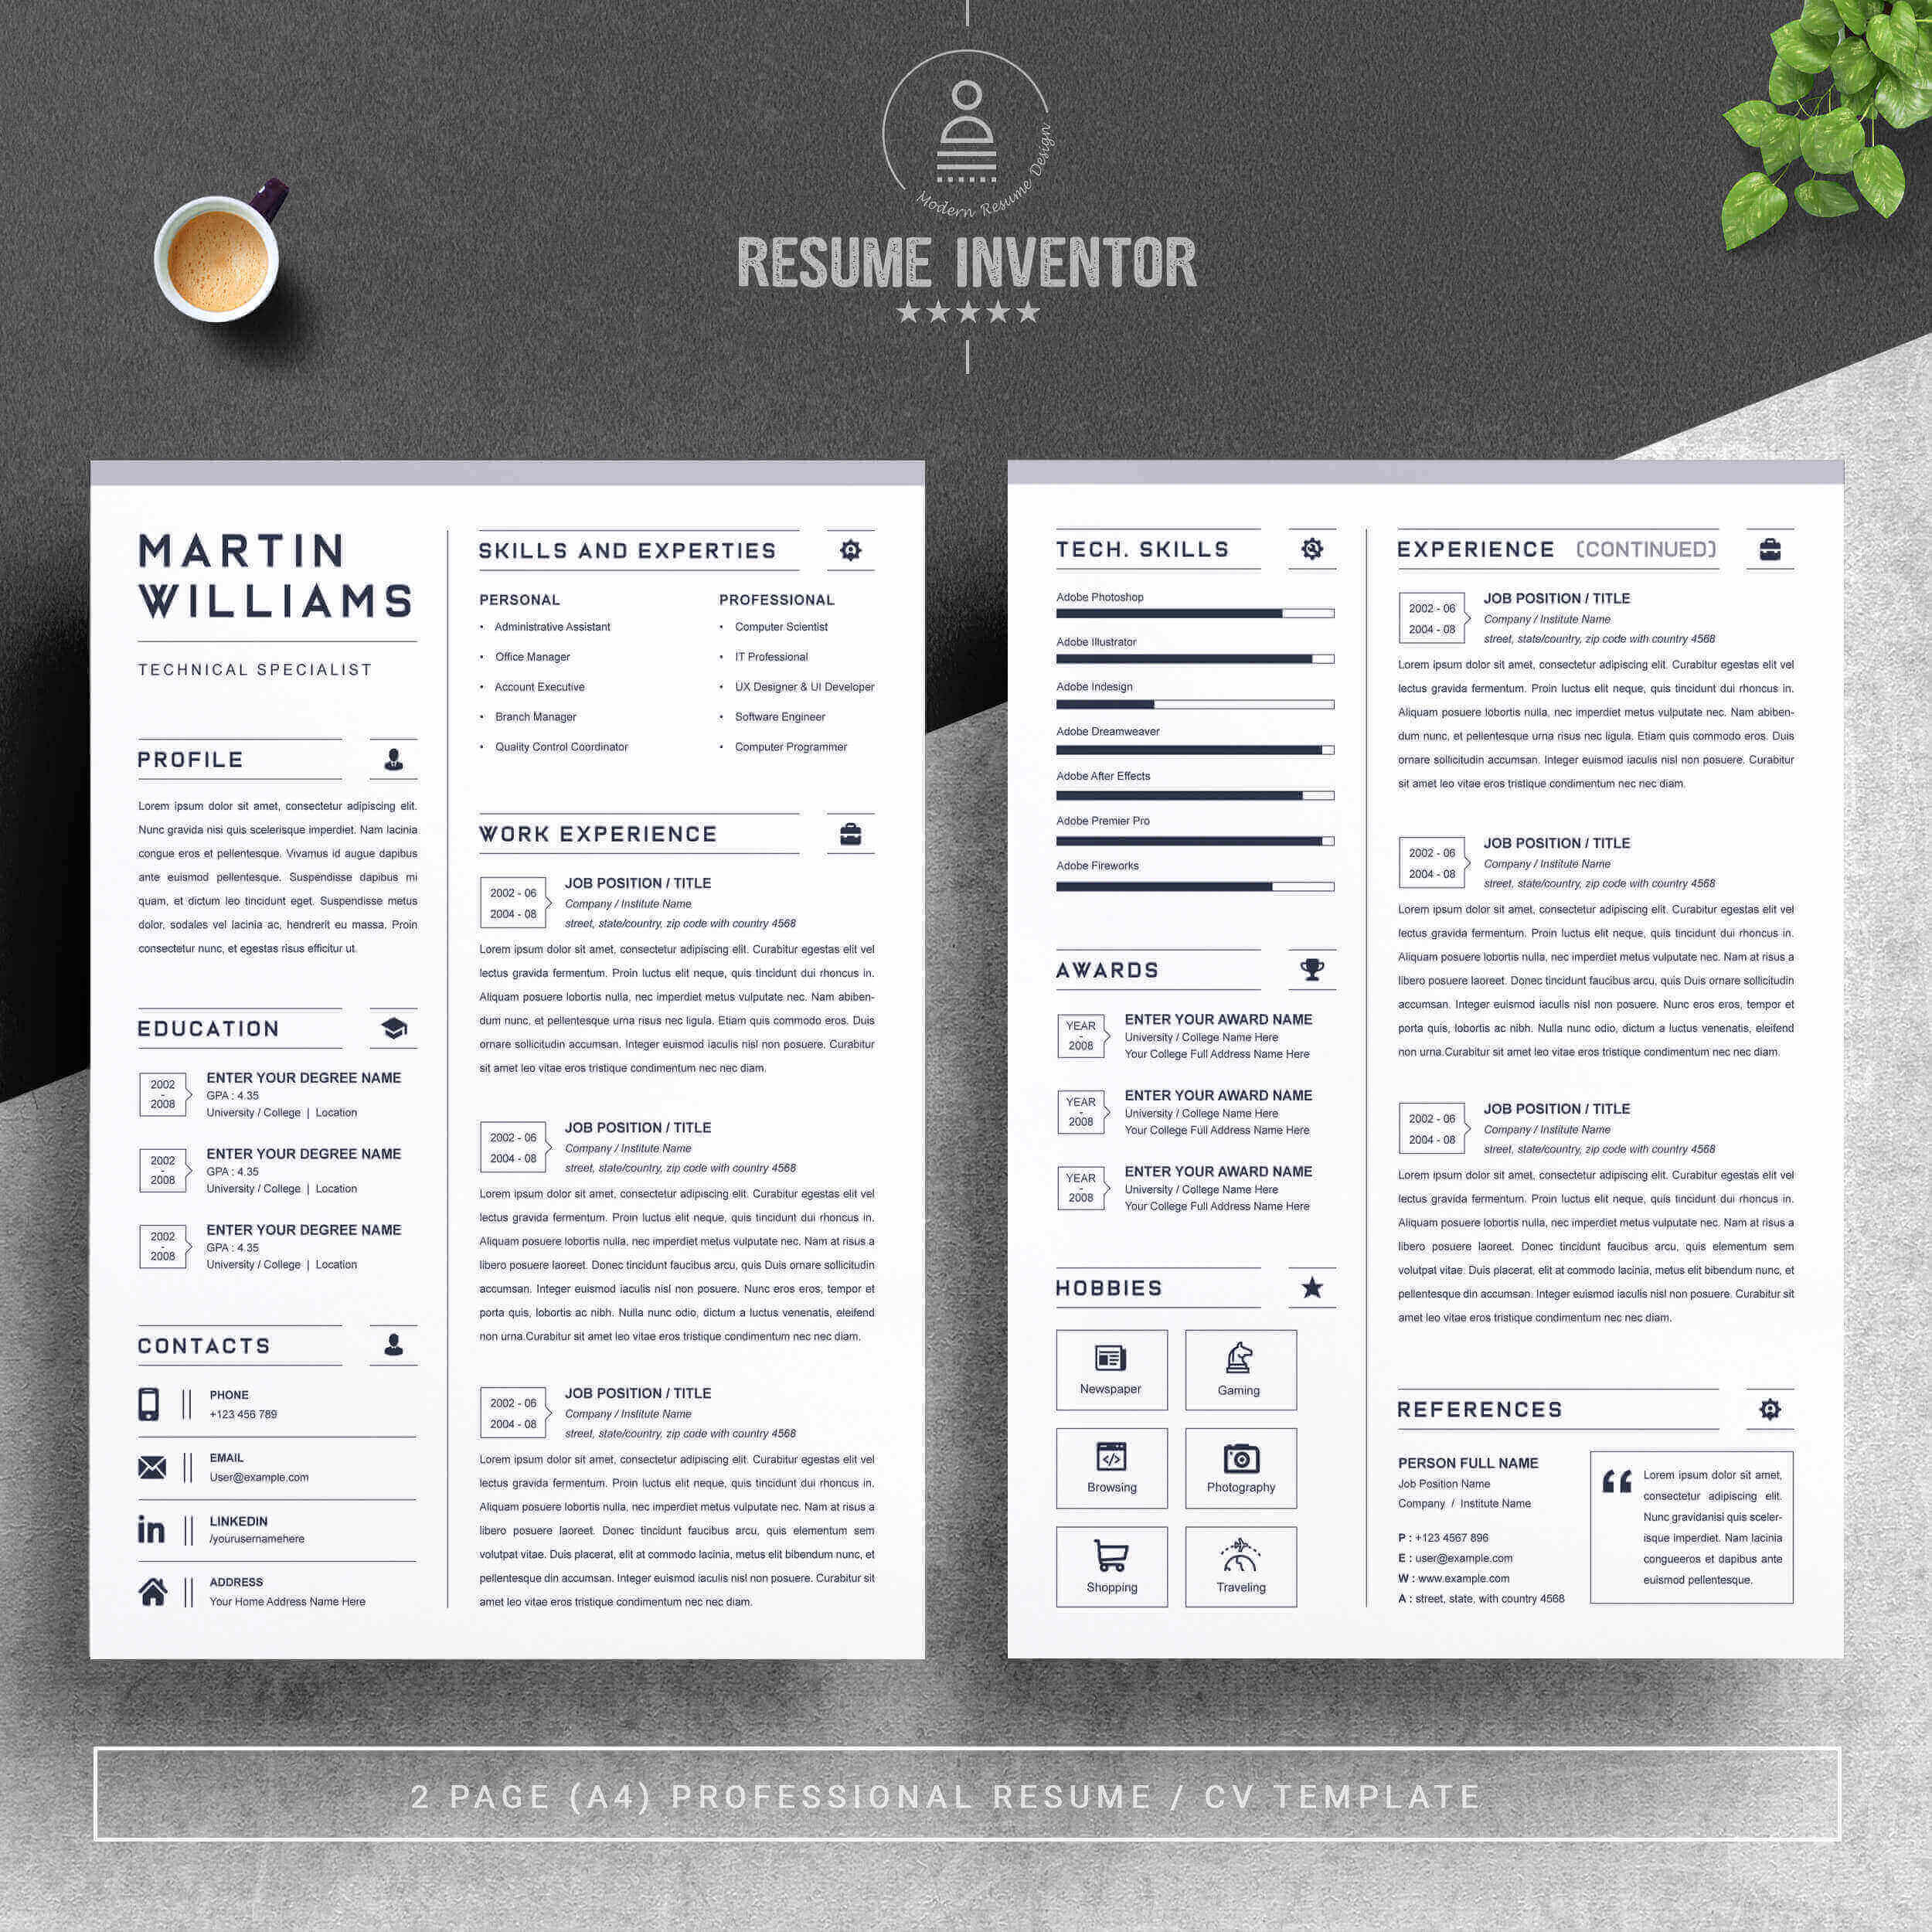 Technical Specialist CV & Resume Template Design | Best Designer Resume Template preview image.